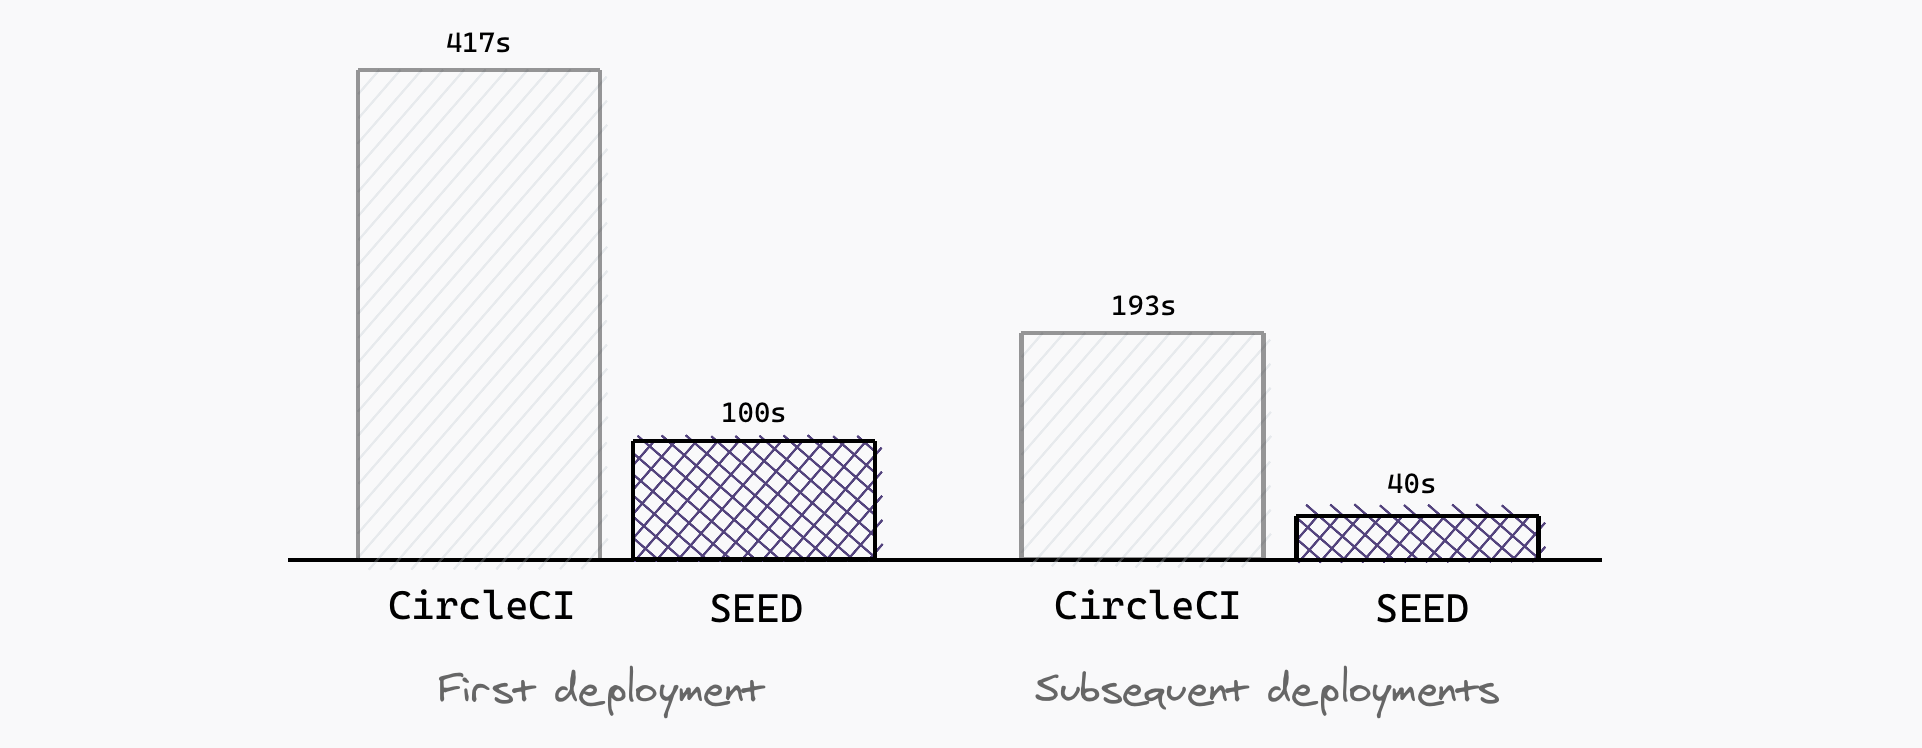 CDK deployments CircleCI vs Seed